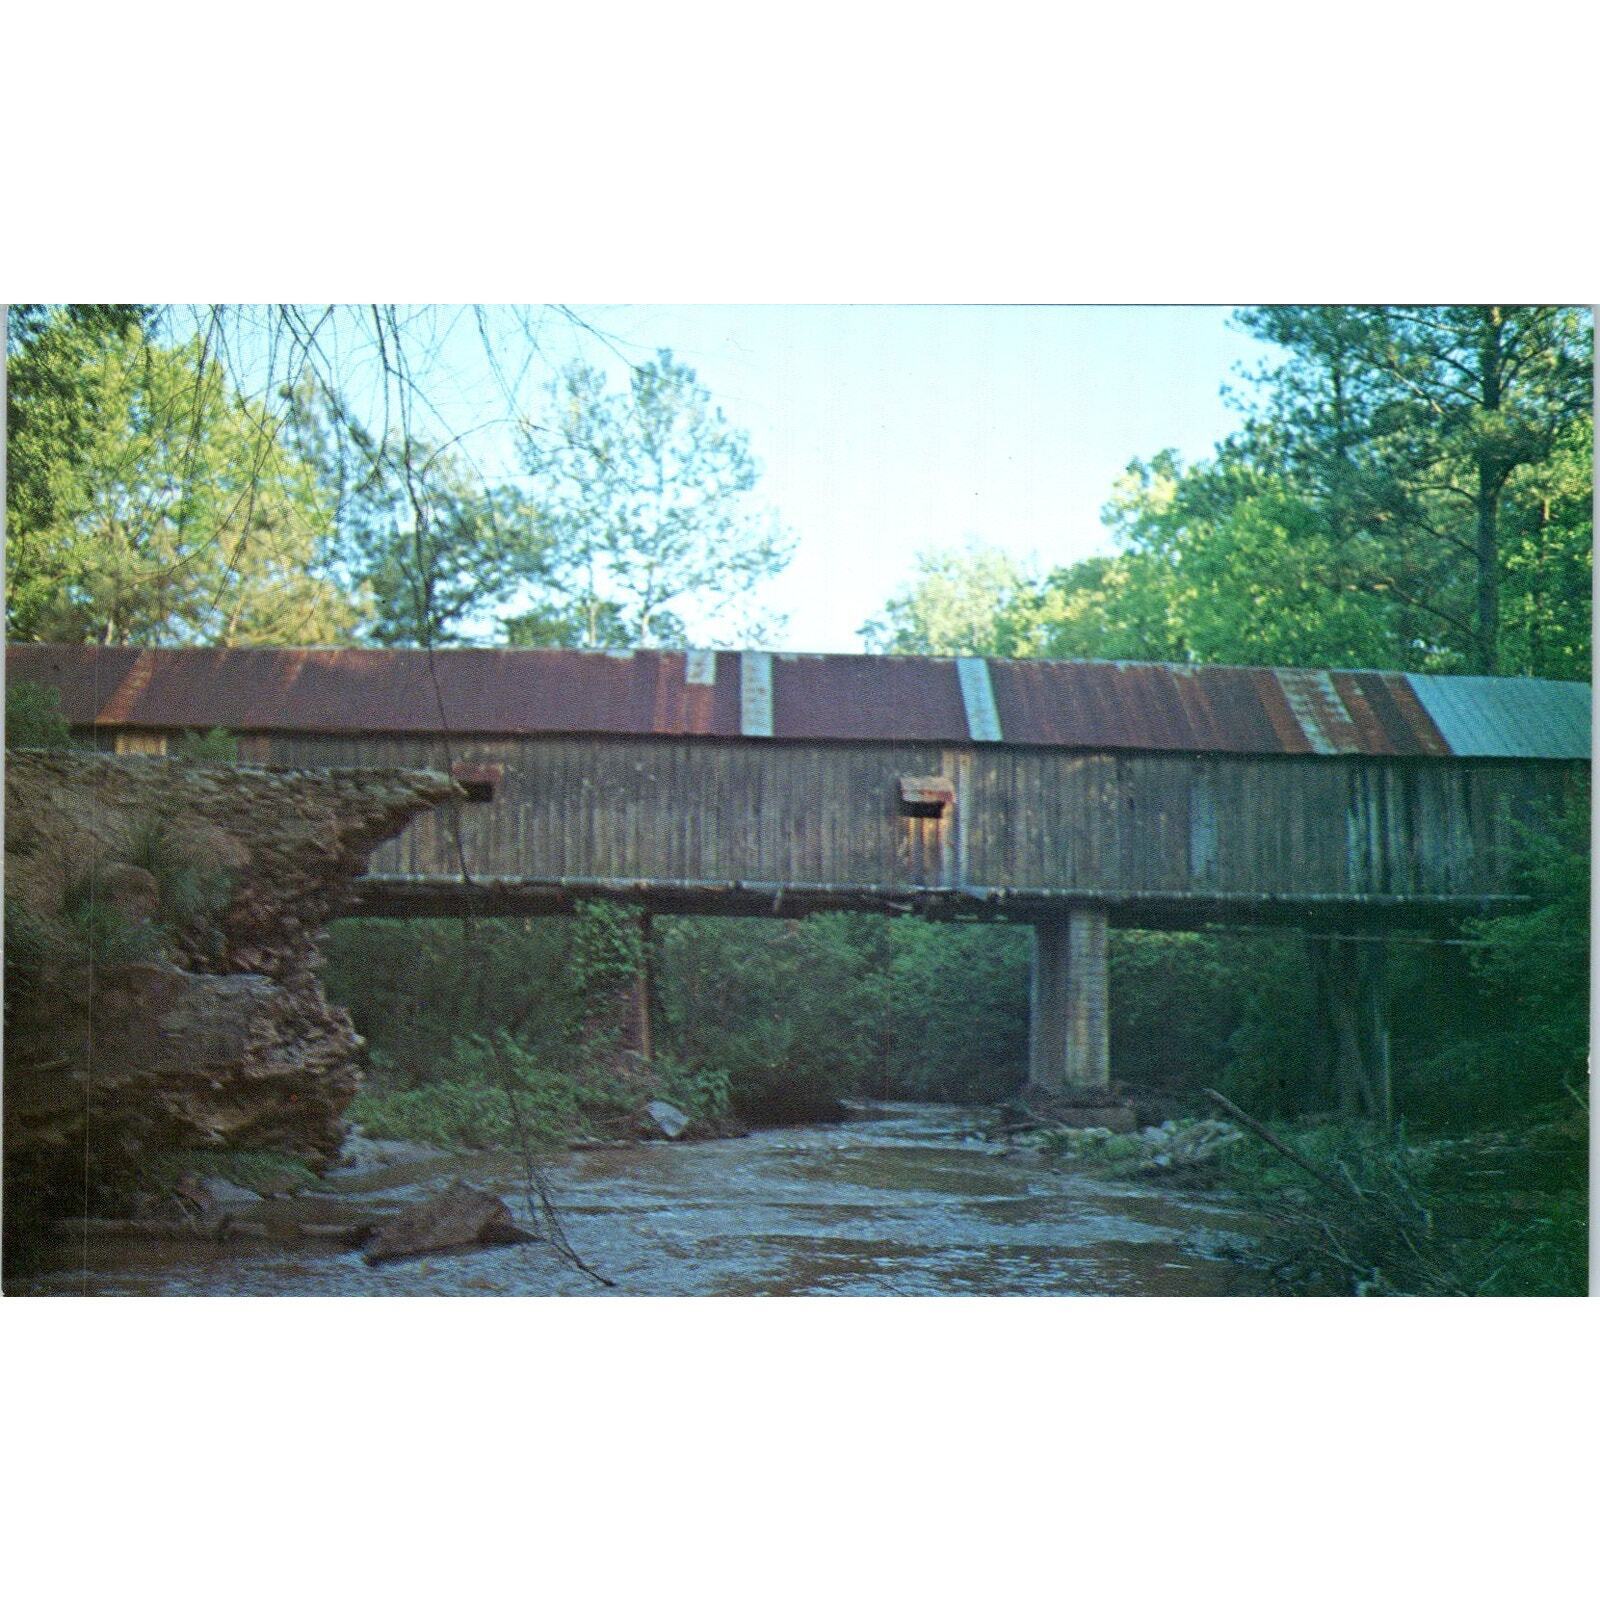 Ruffs Mills Bridge Marietta-Smyrna Cobb Cty Georgia Covered Bridge Postcard PC5